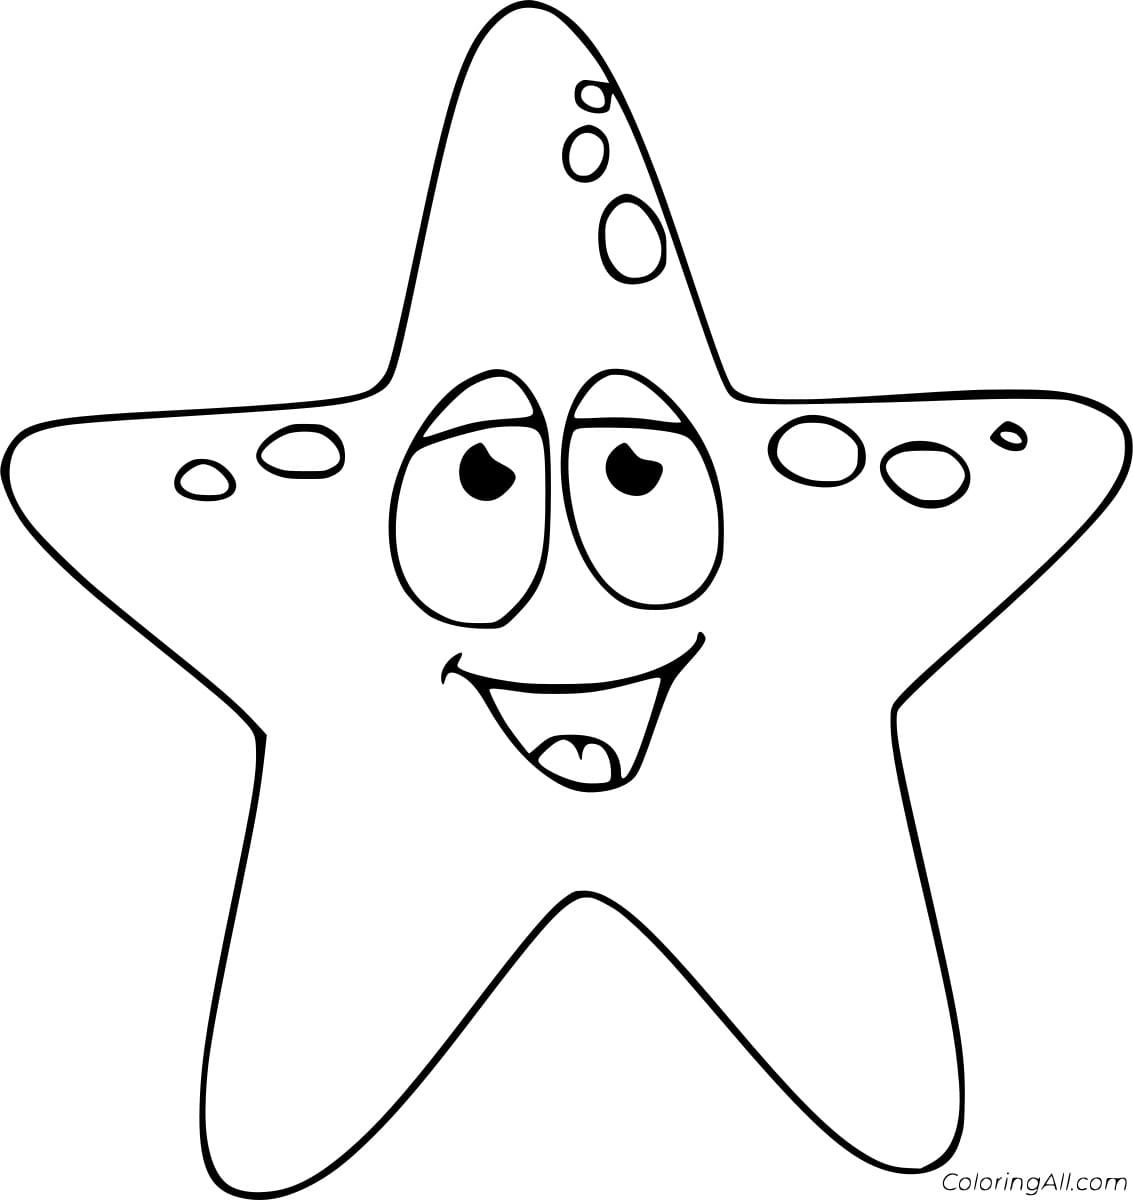 Easy Cartoon Starfish Image